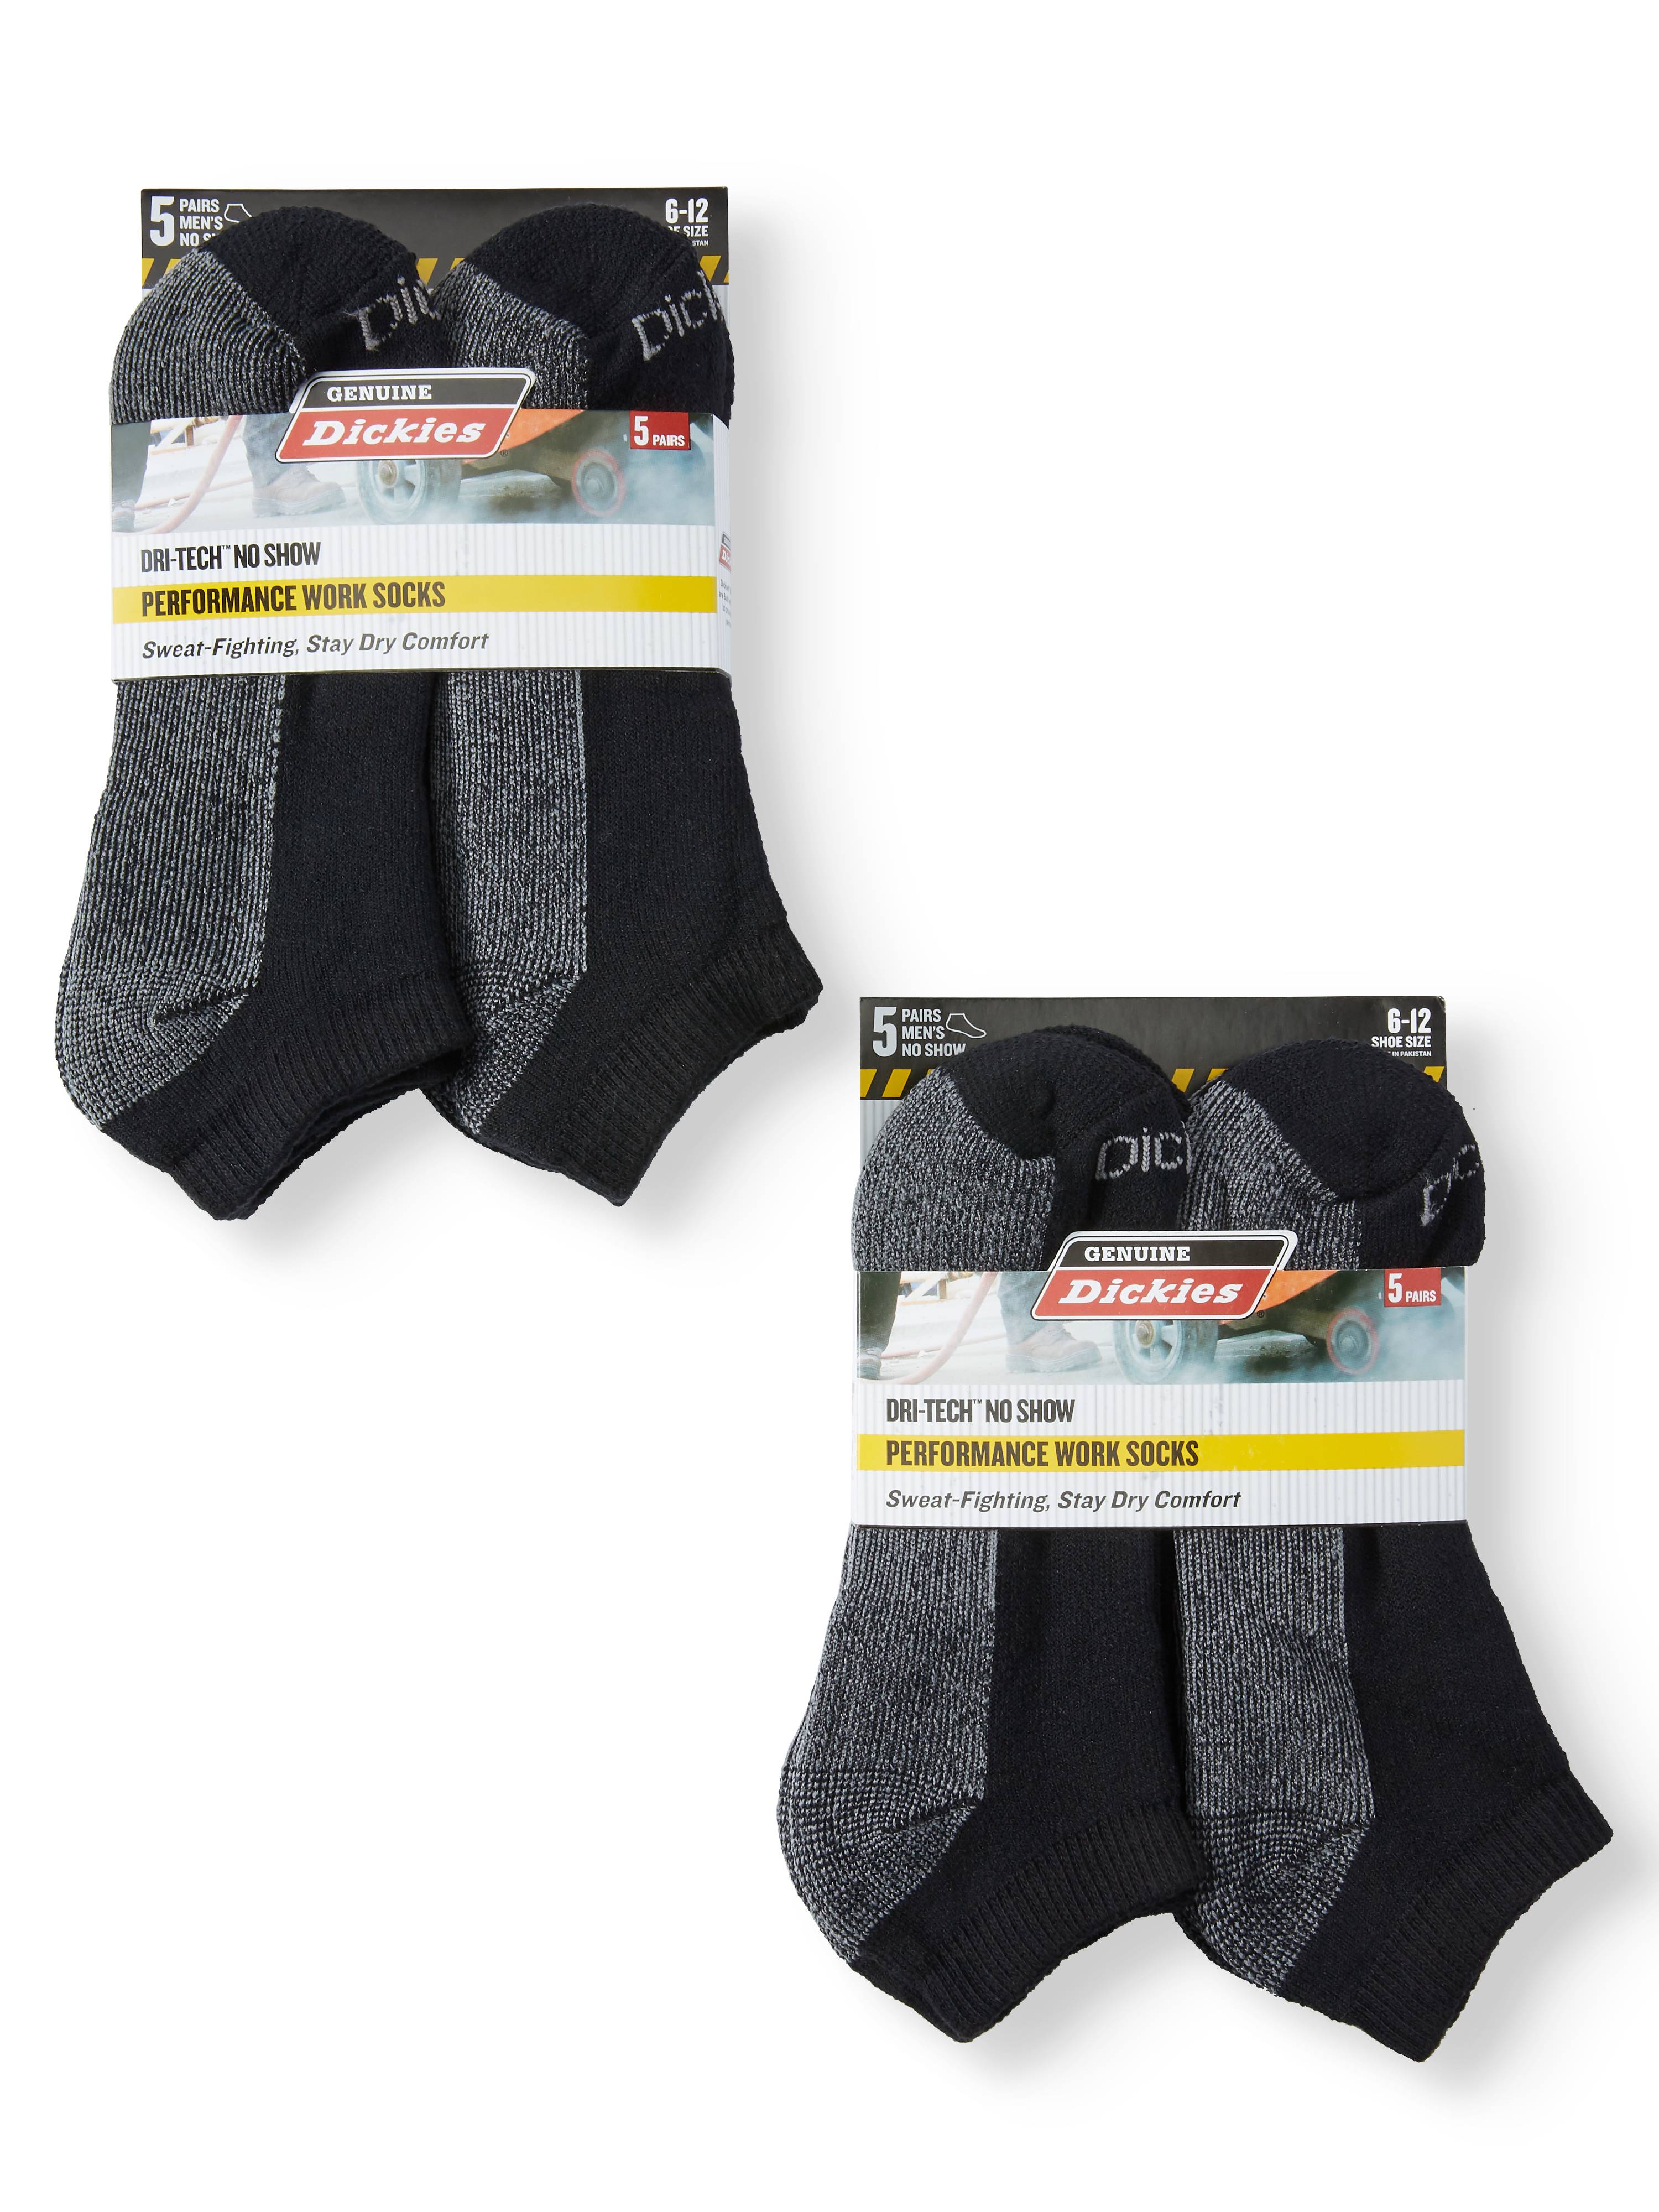 Men's Dri-Tech Comfort No Show Work Socks, 10-Pack - image 2 of 2